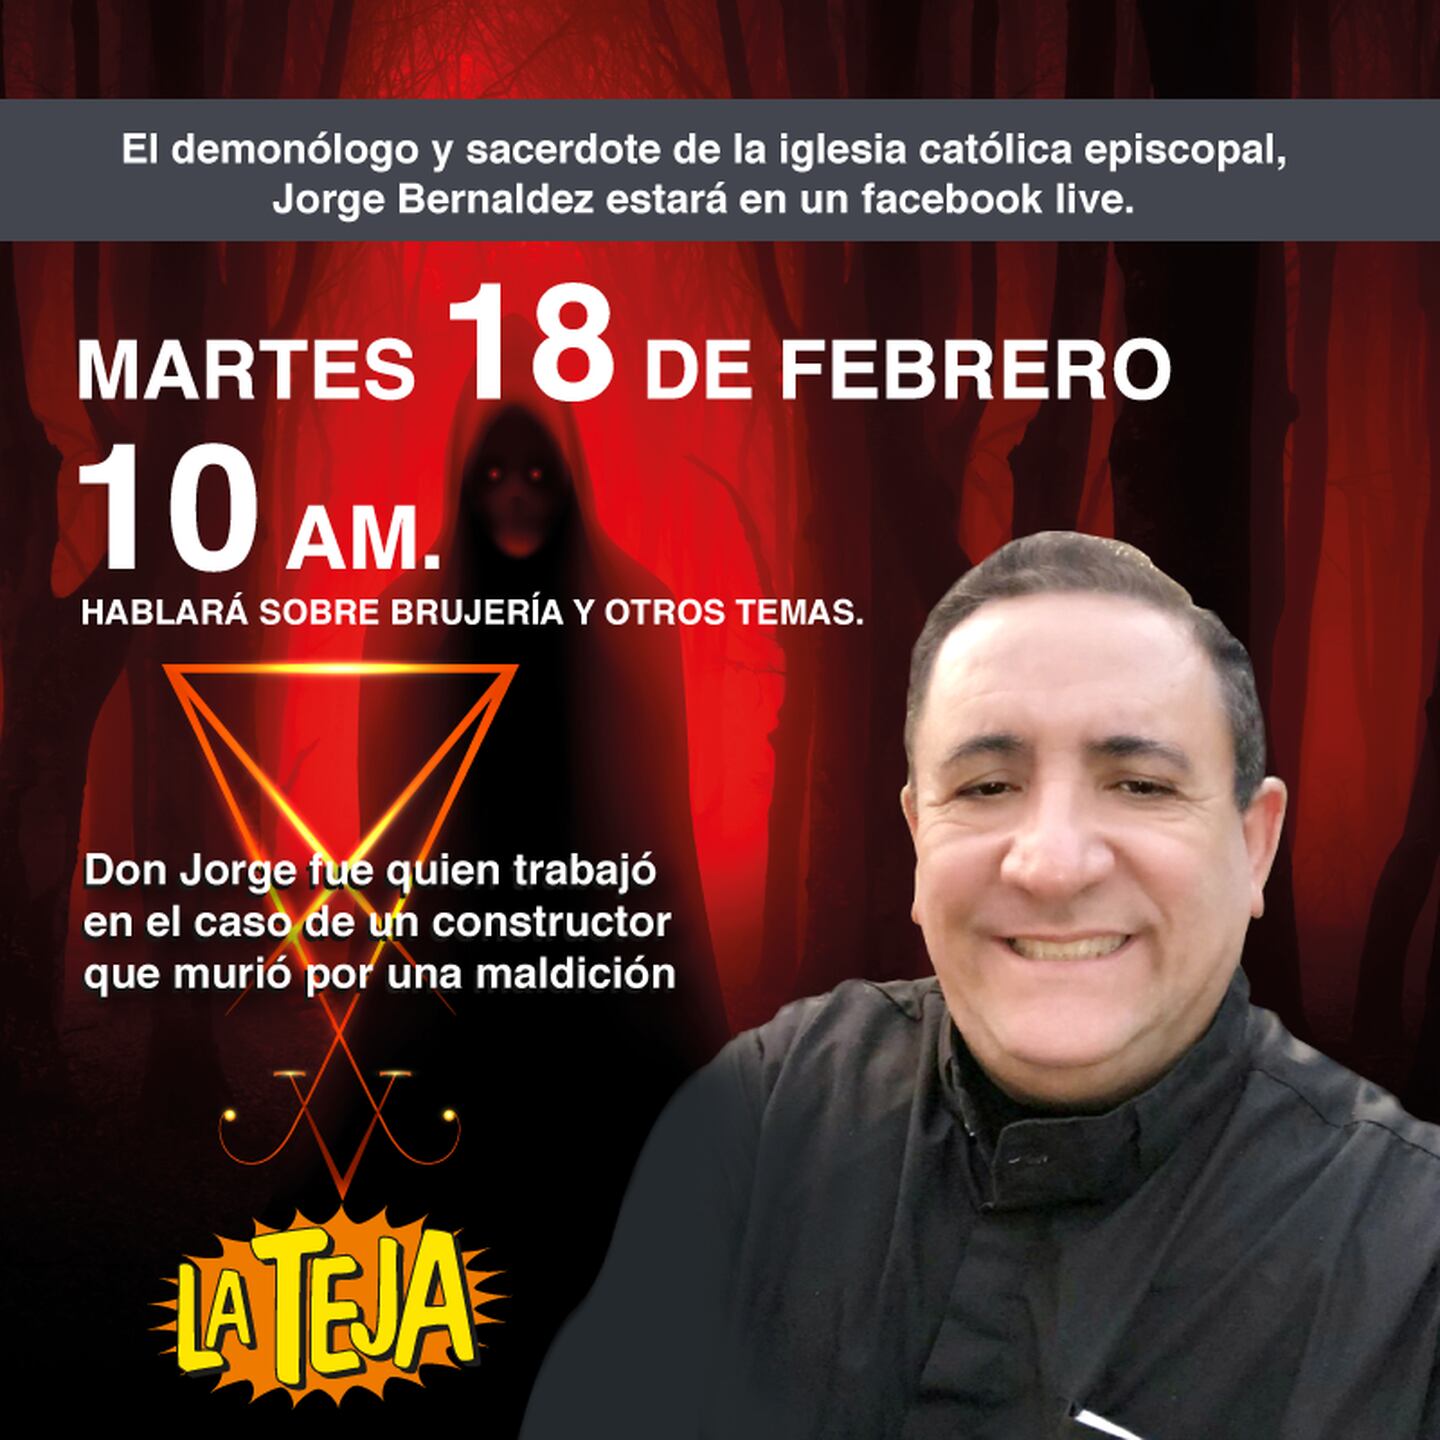 Jorge Bernaldez Calderín, demonólogo estará en facebook live.